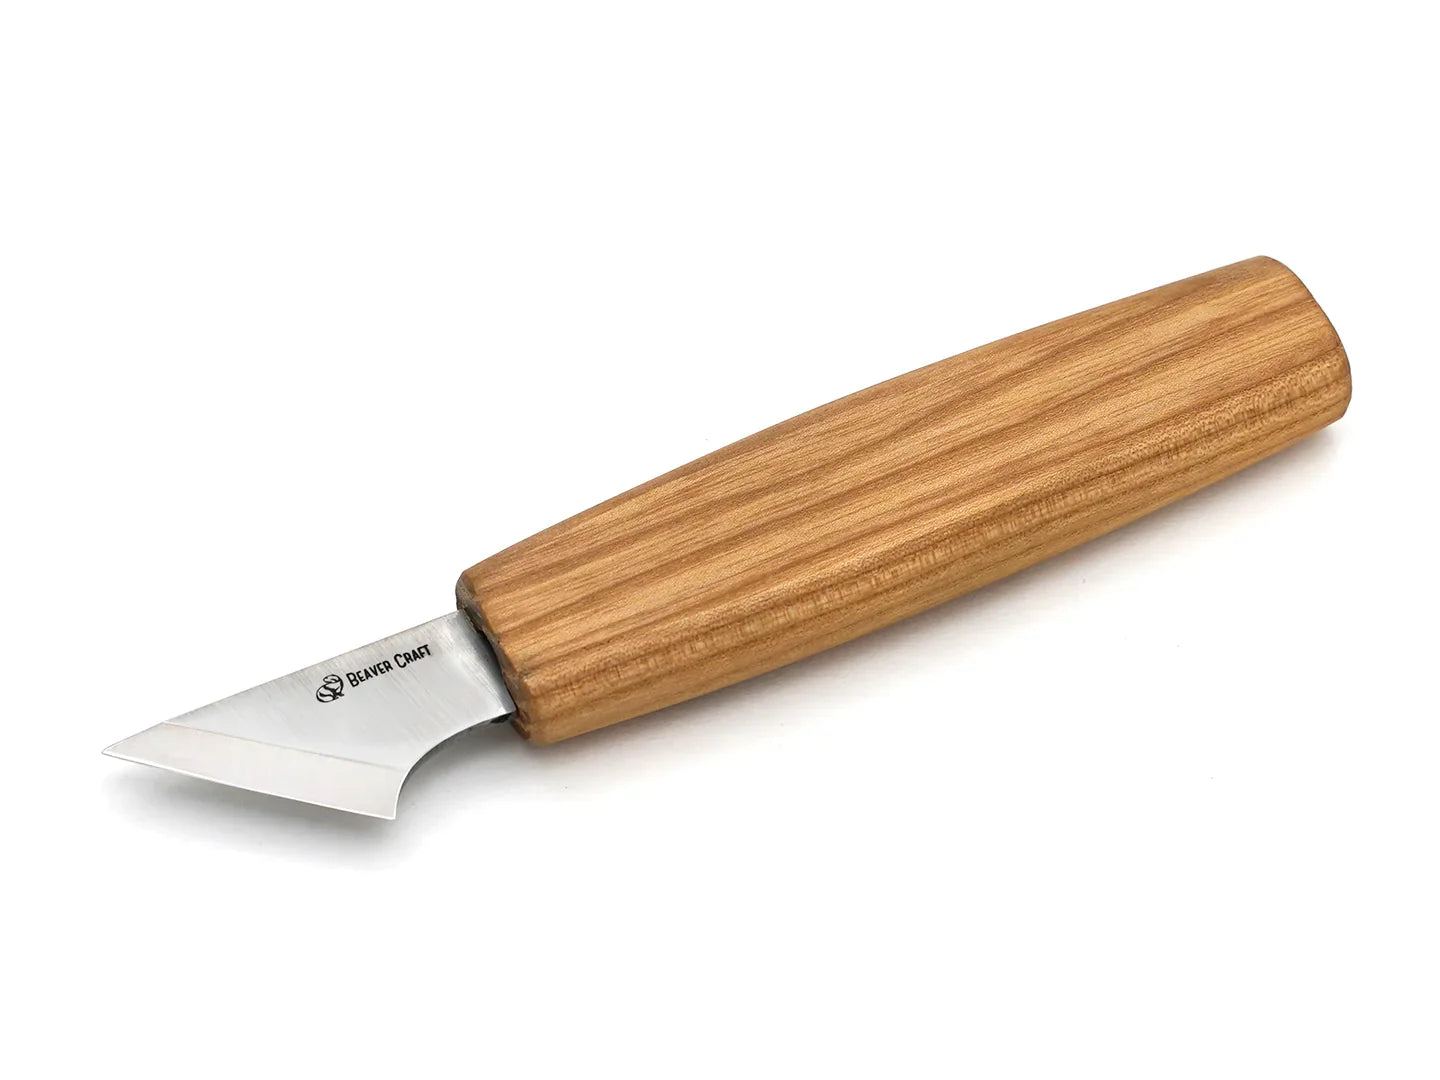 BeaverCraft C11 - Knife for Chip Wood Carving